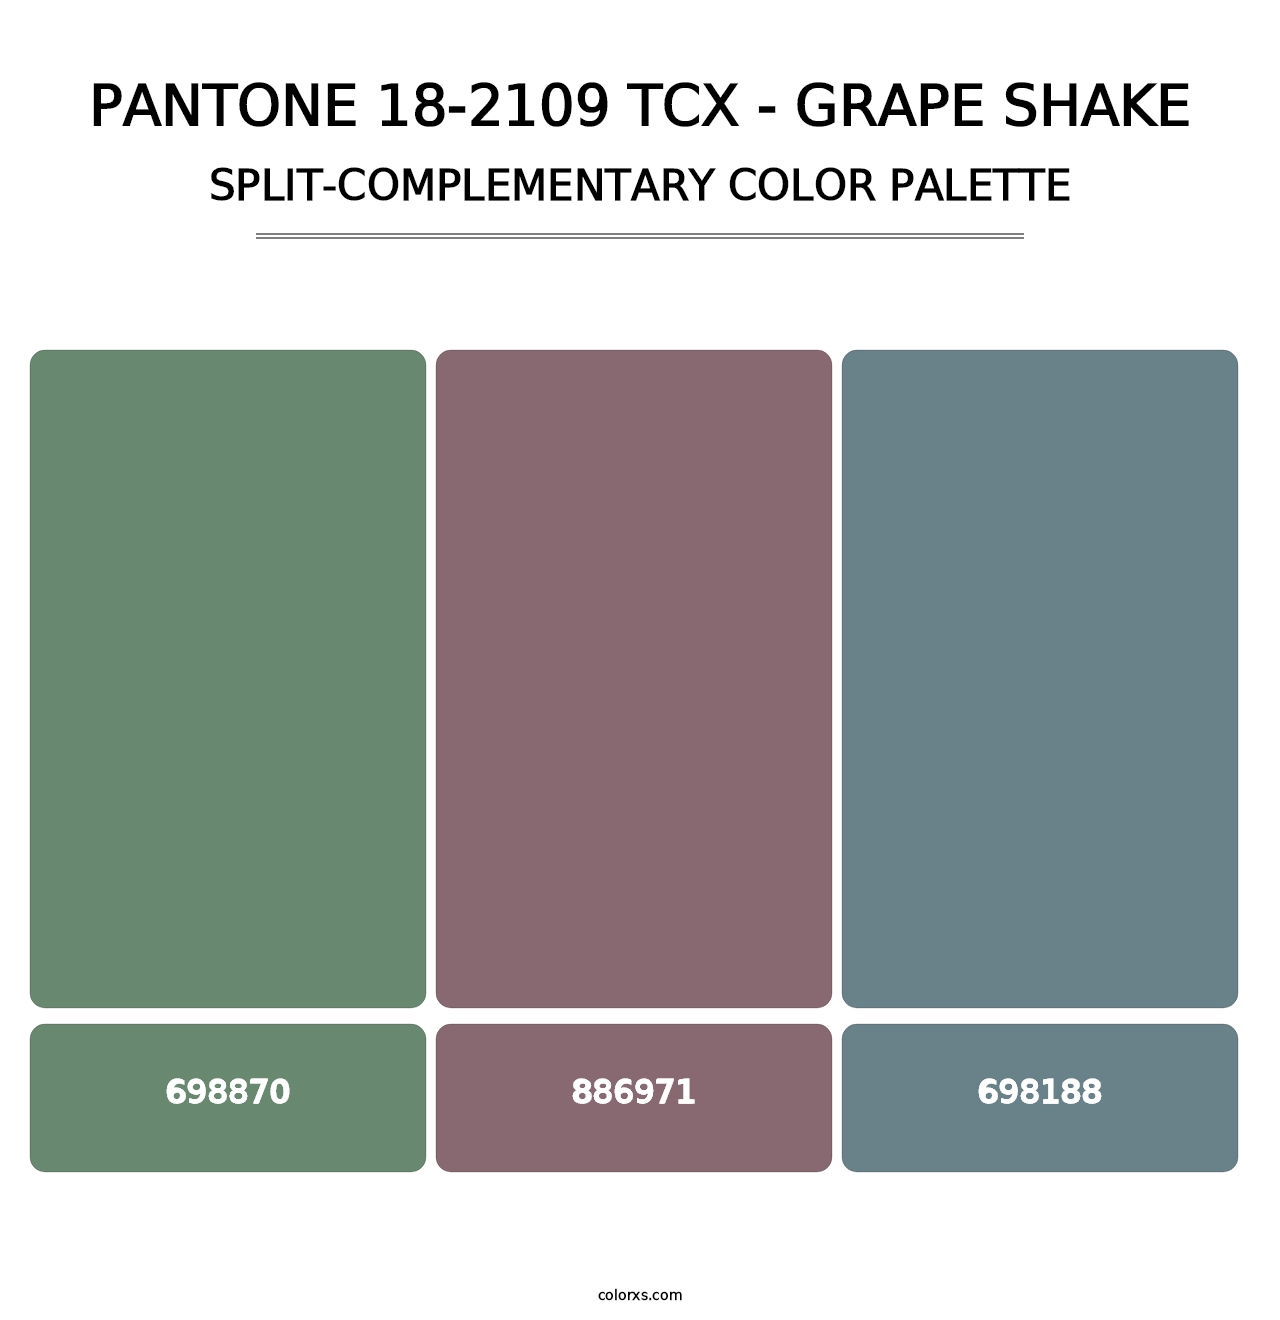 PANTONE 18-2109 TCX - Grape Shake - Split-Complementary Color Palette